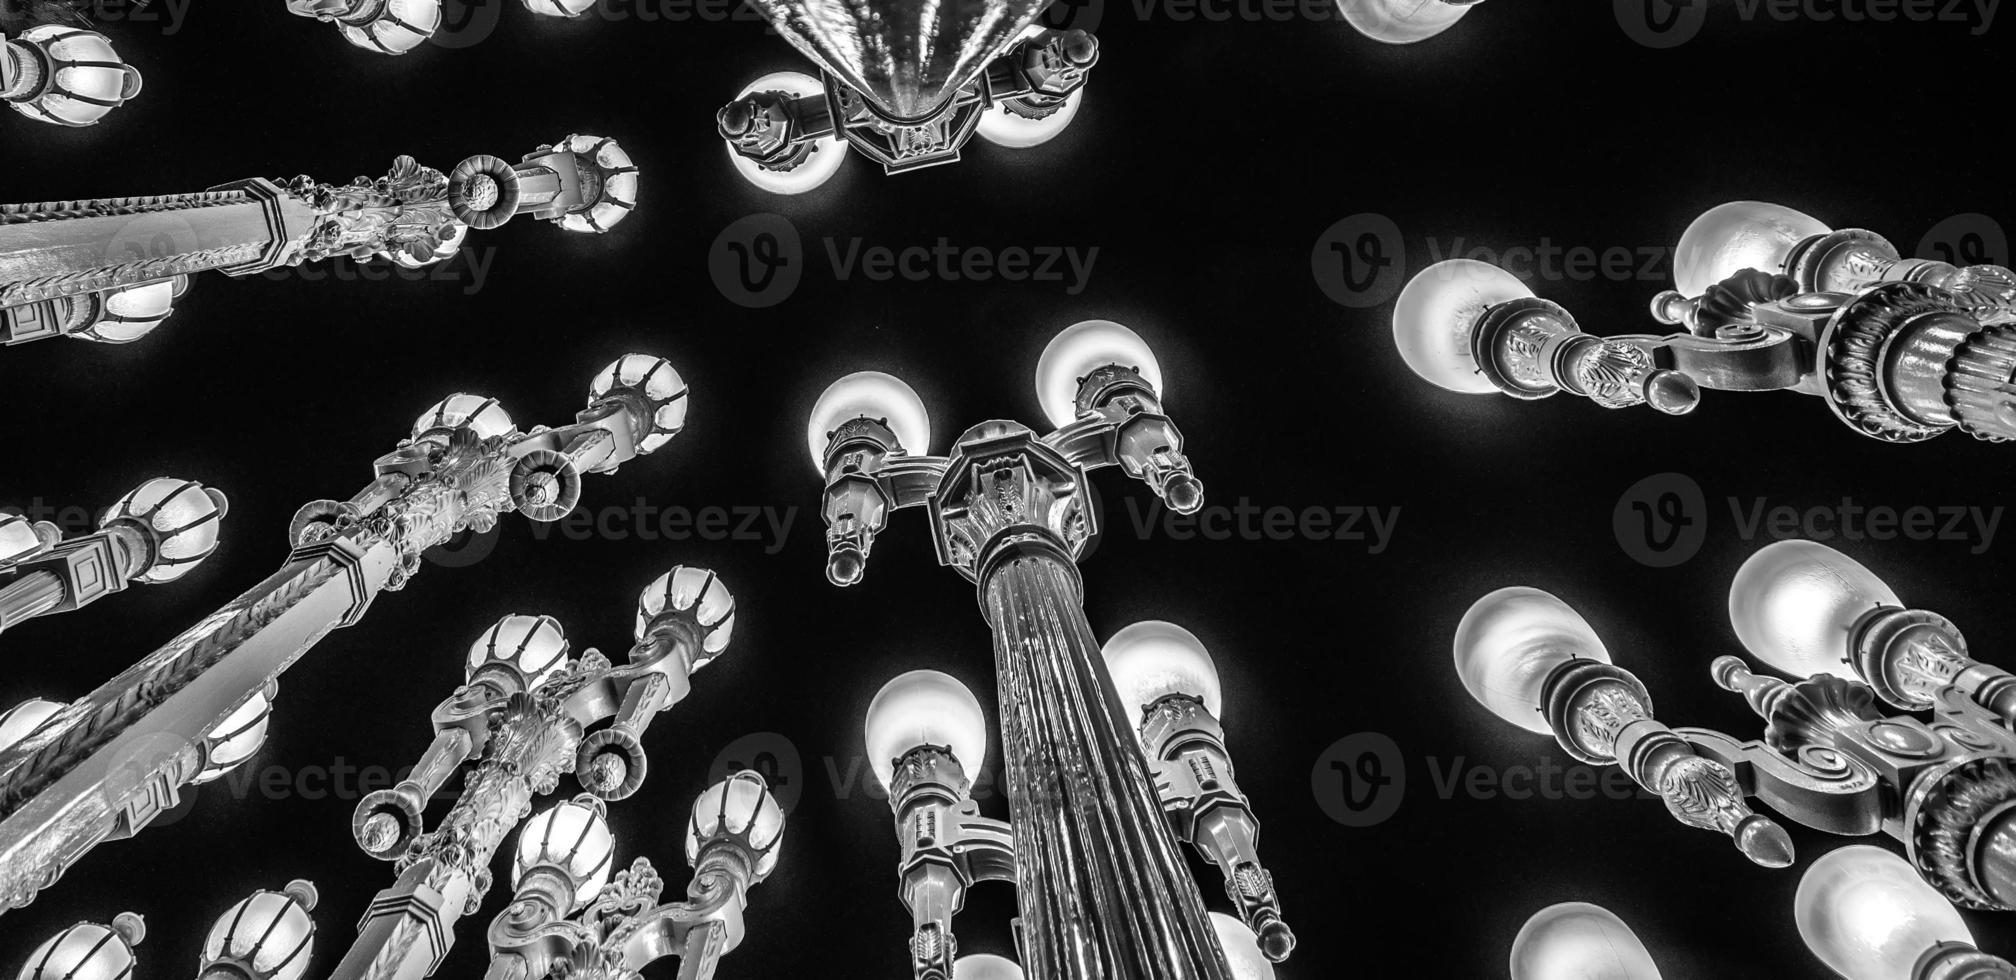 stedelijke lichtsculptuur bij lacma 's nachts los angeles californië foto